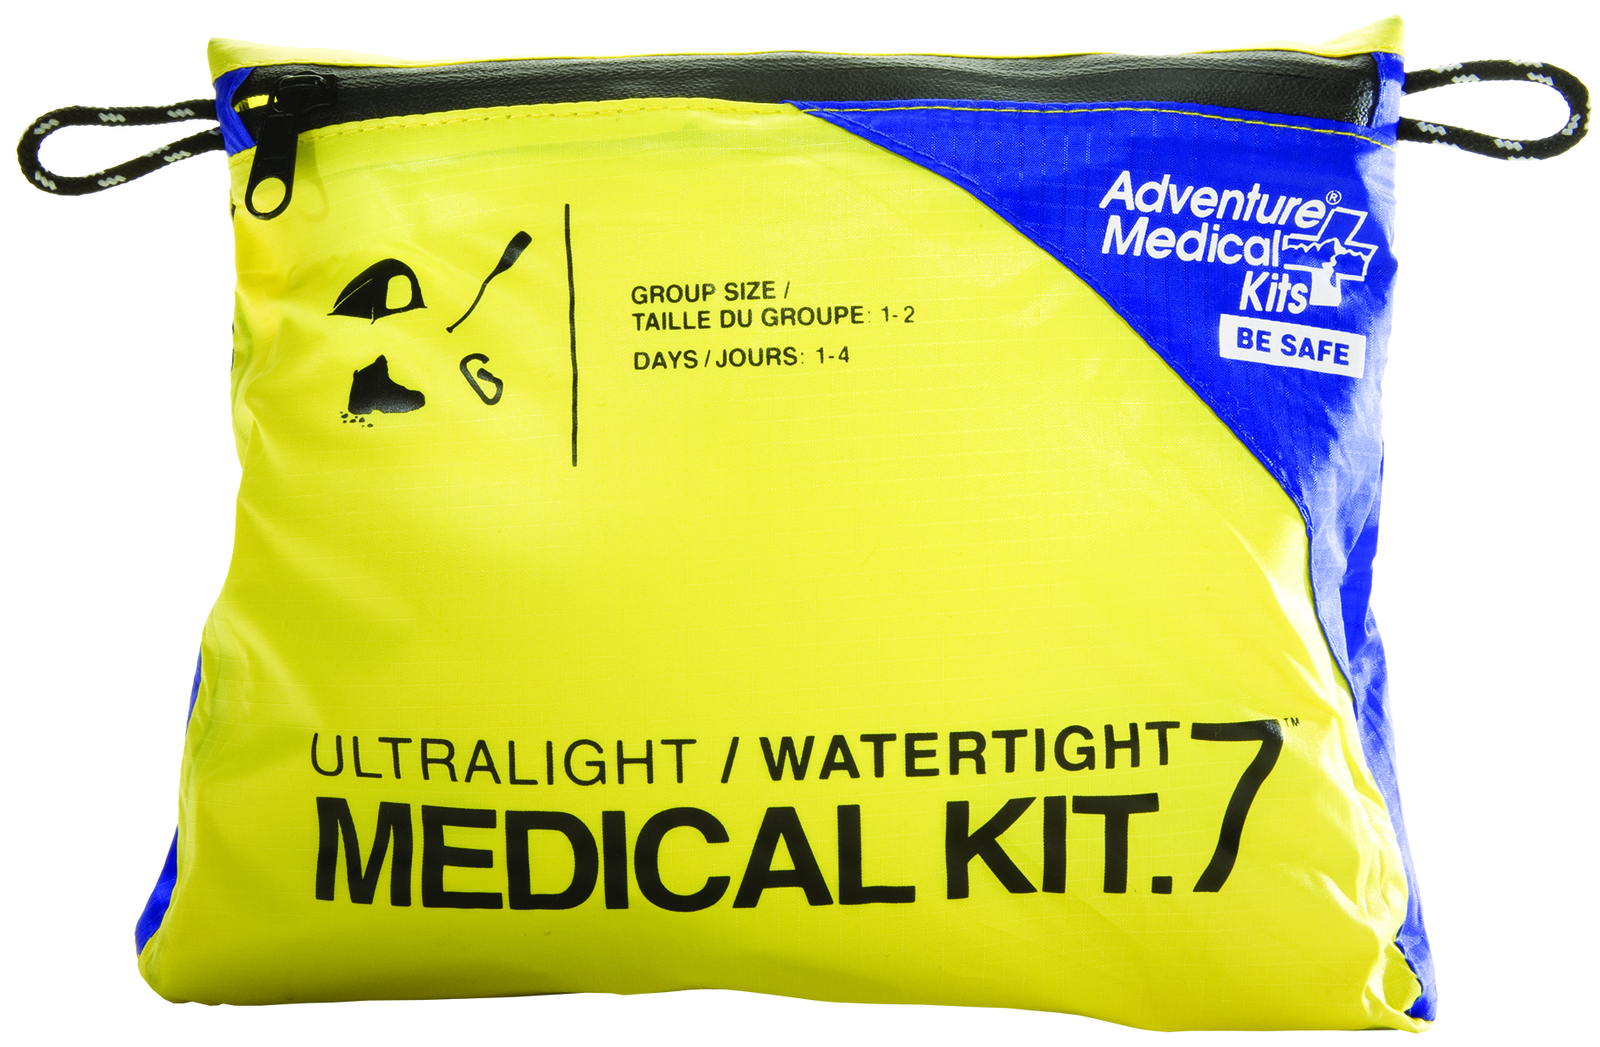 AMK 0.7 Ultralight & Watertight Medical Kit - 237 grams